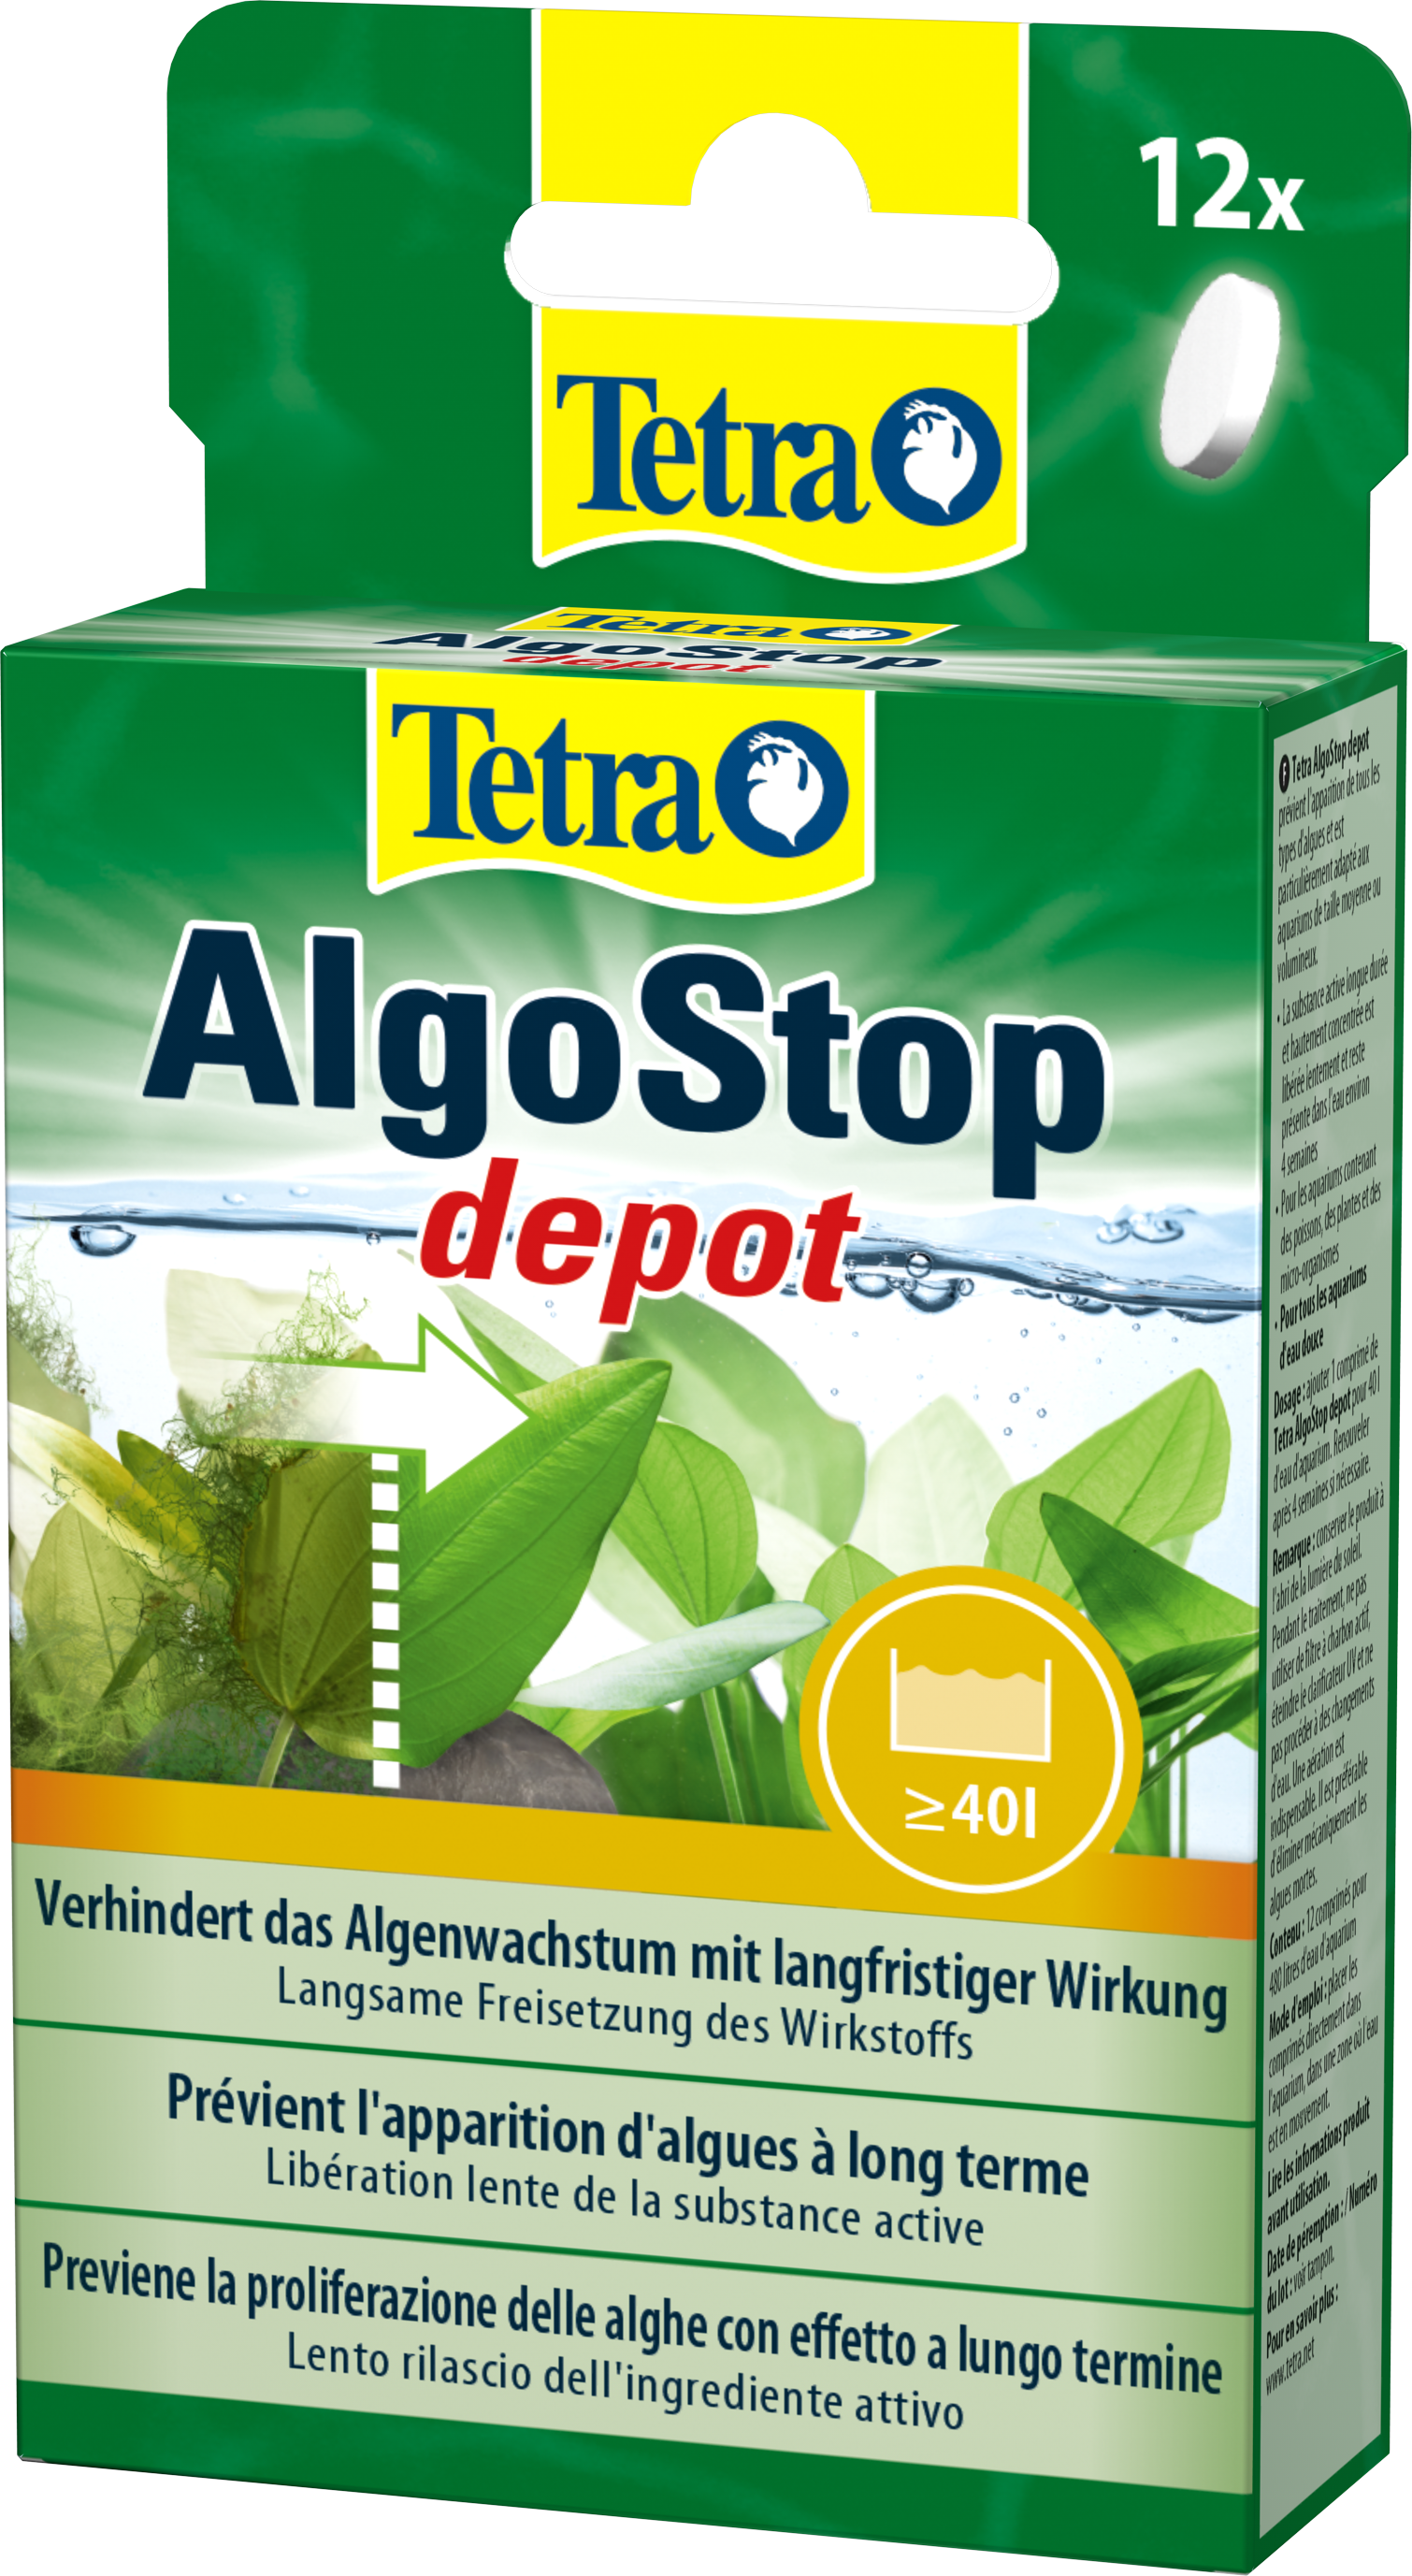 AlgoStop depot*: Tetra